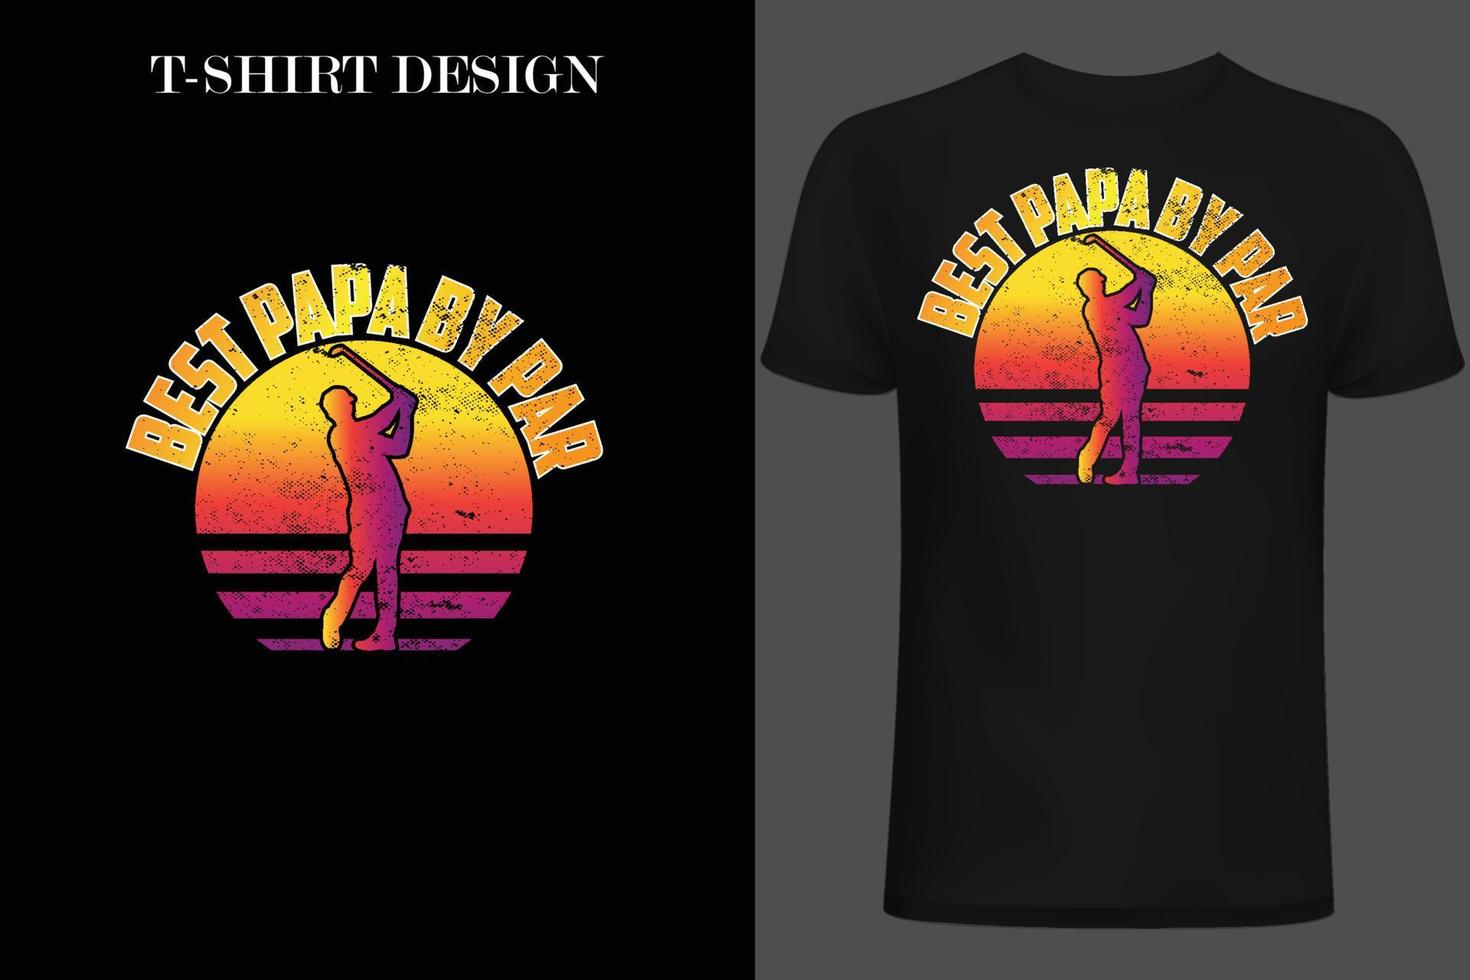 design de camiseta de golfe. design de camisa de golfe vintage. design de camiseta vintage vetor